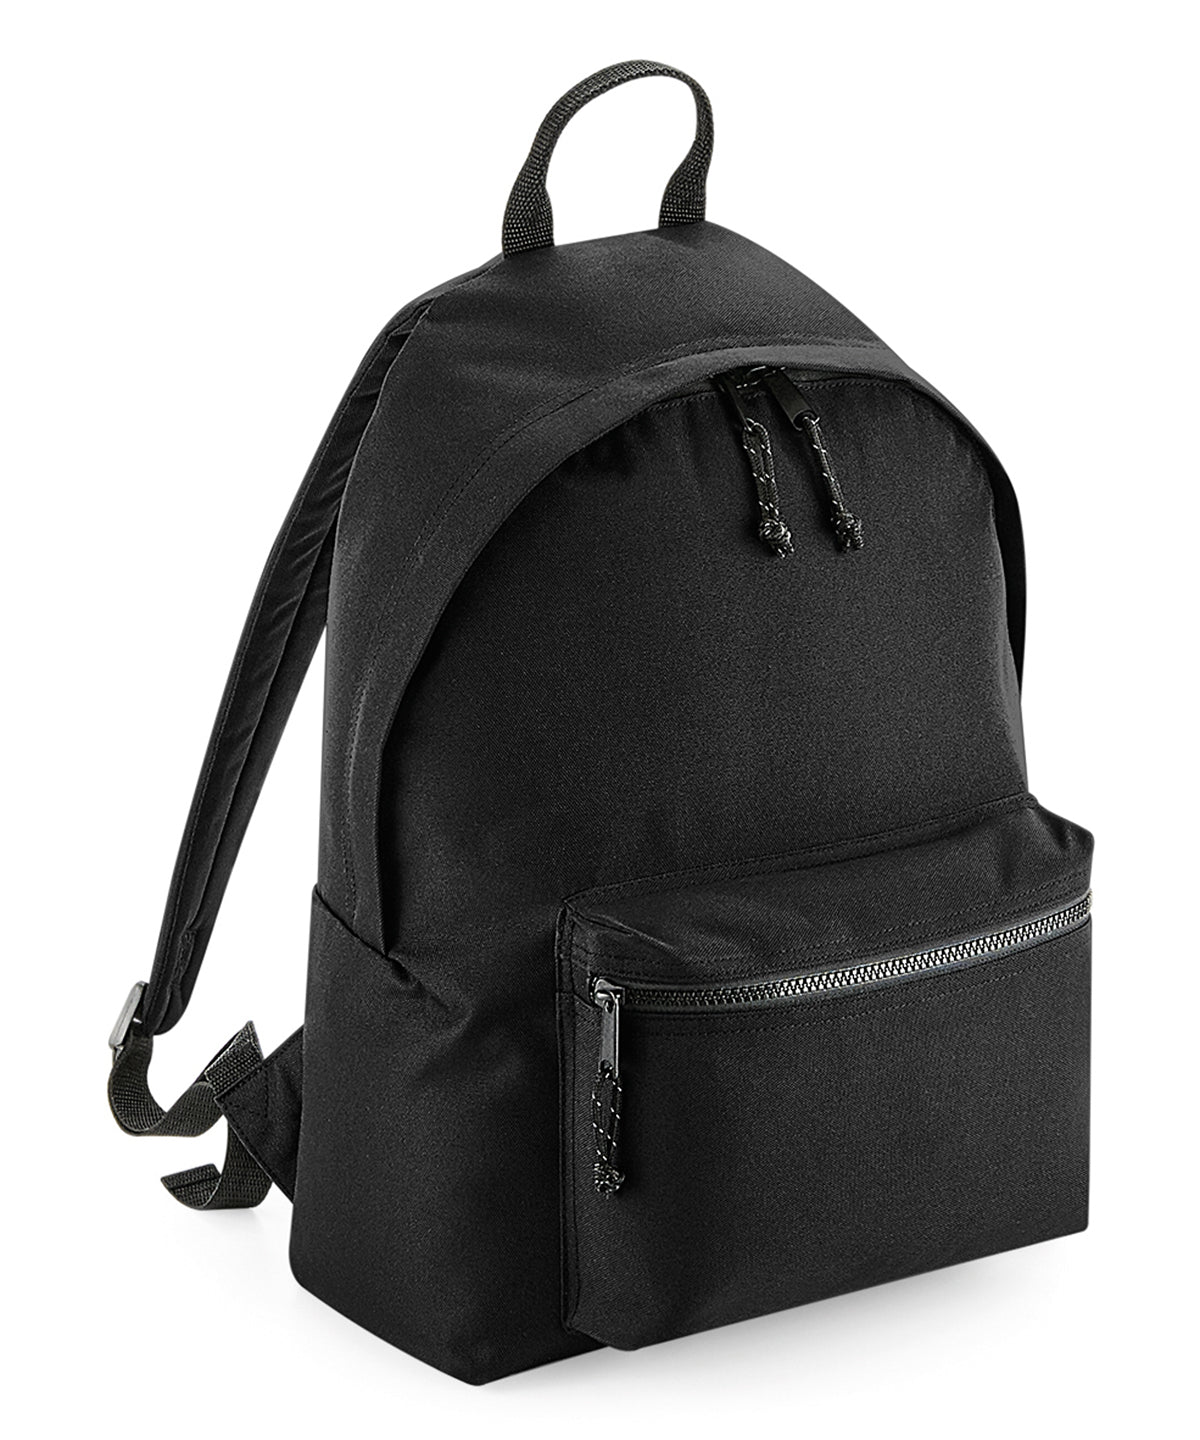 Personalised Bags - Black Bagbase Recycled backpack